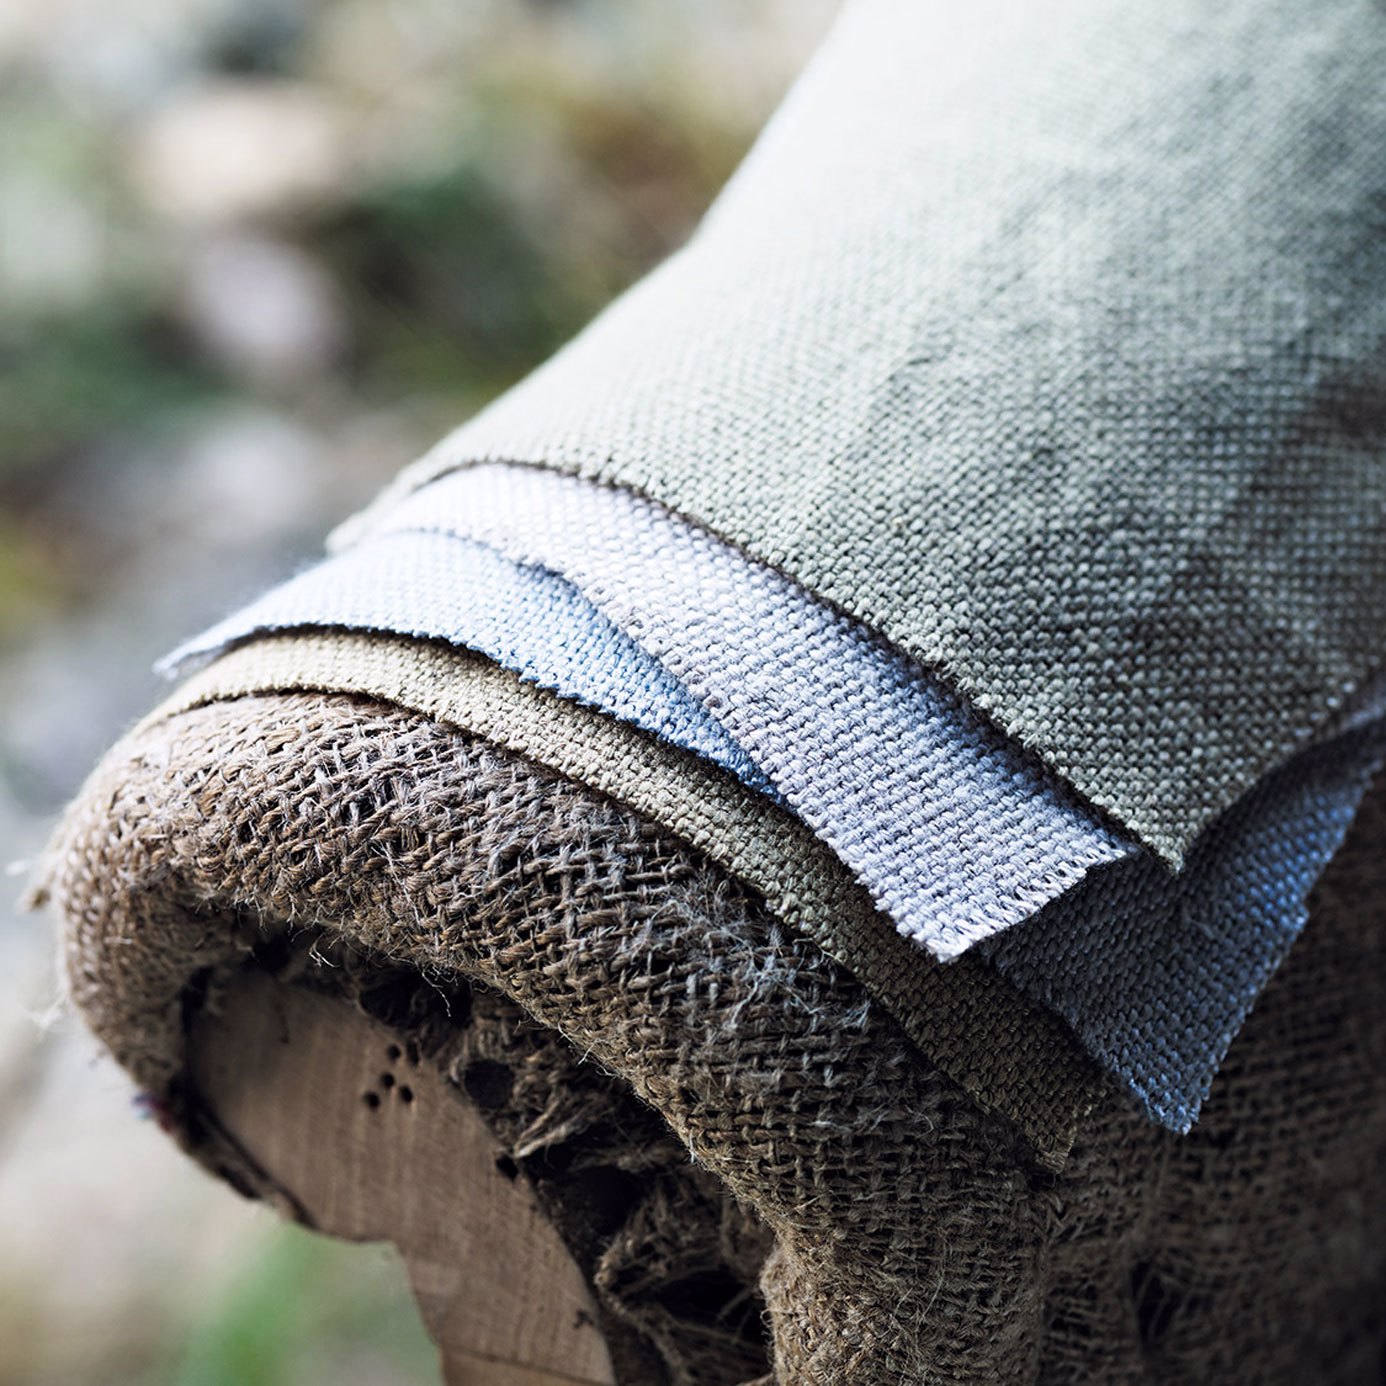 Woodland Plain Pebble Fabric by SAN